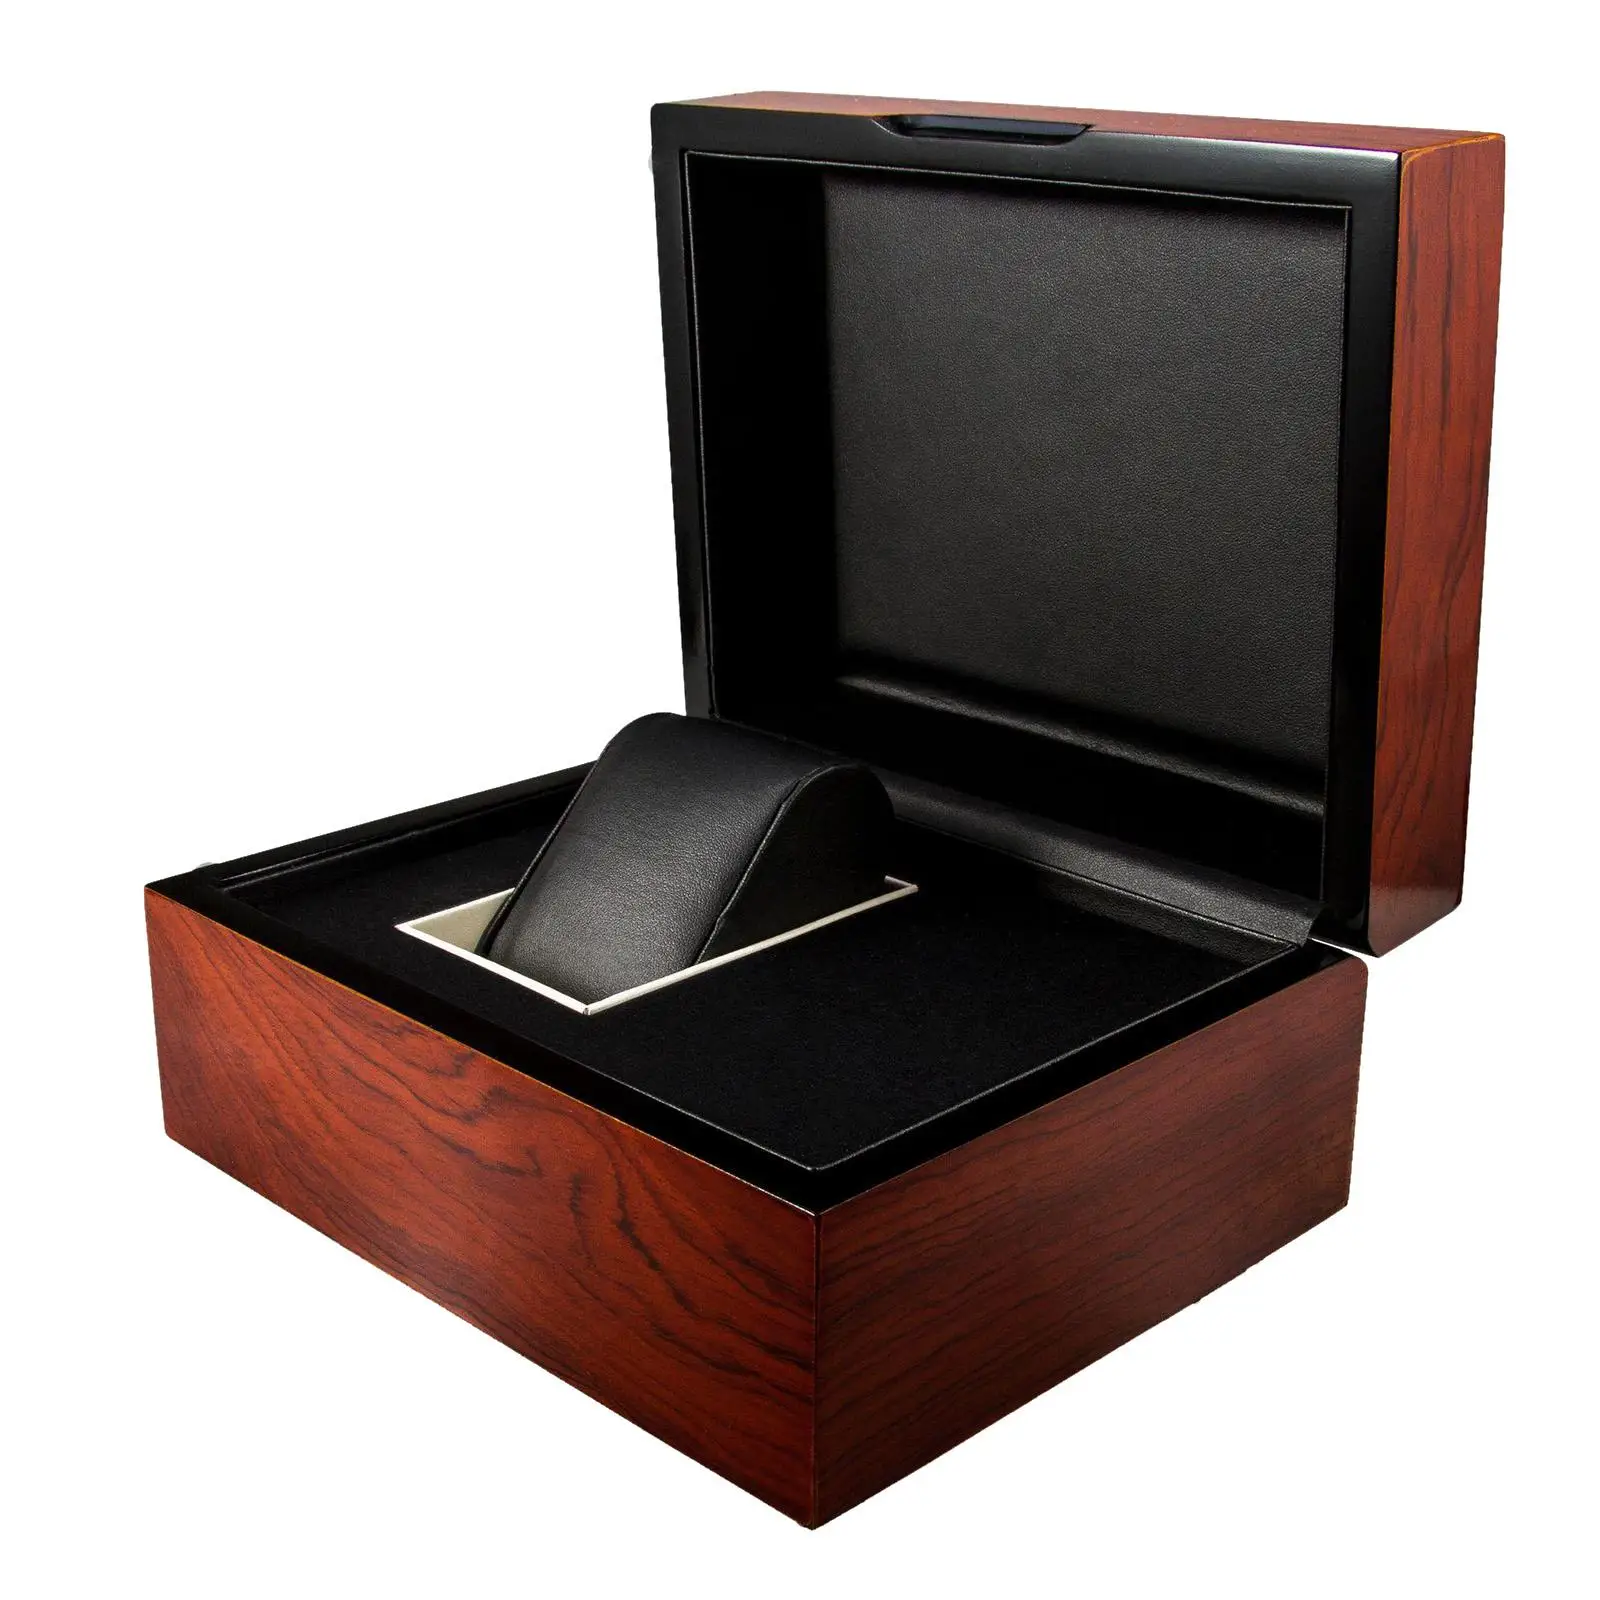 Watch Box Small 1 Mens Leather Display Jewelry Case Organizer Holder Organizer Showcase